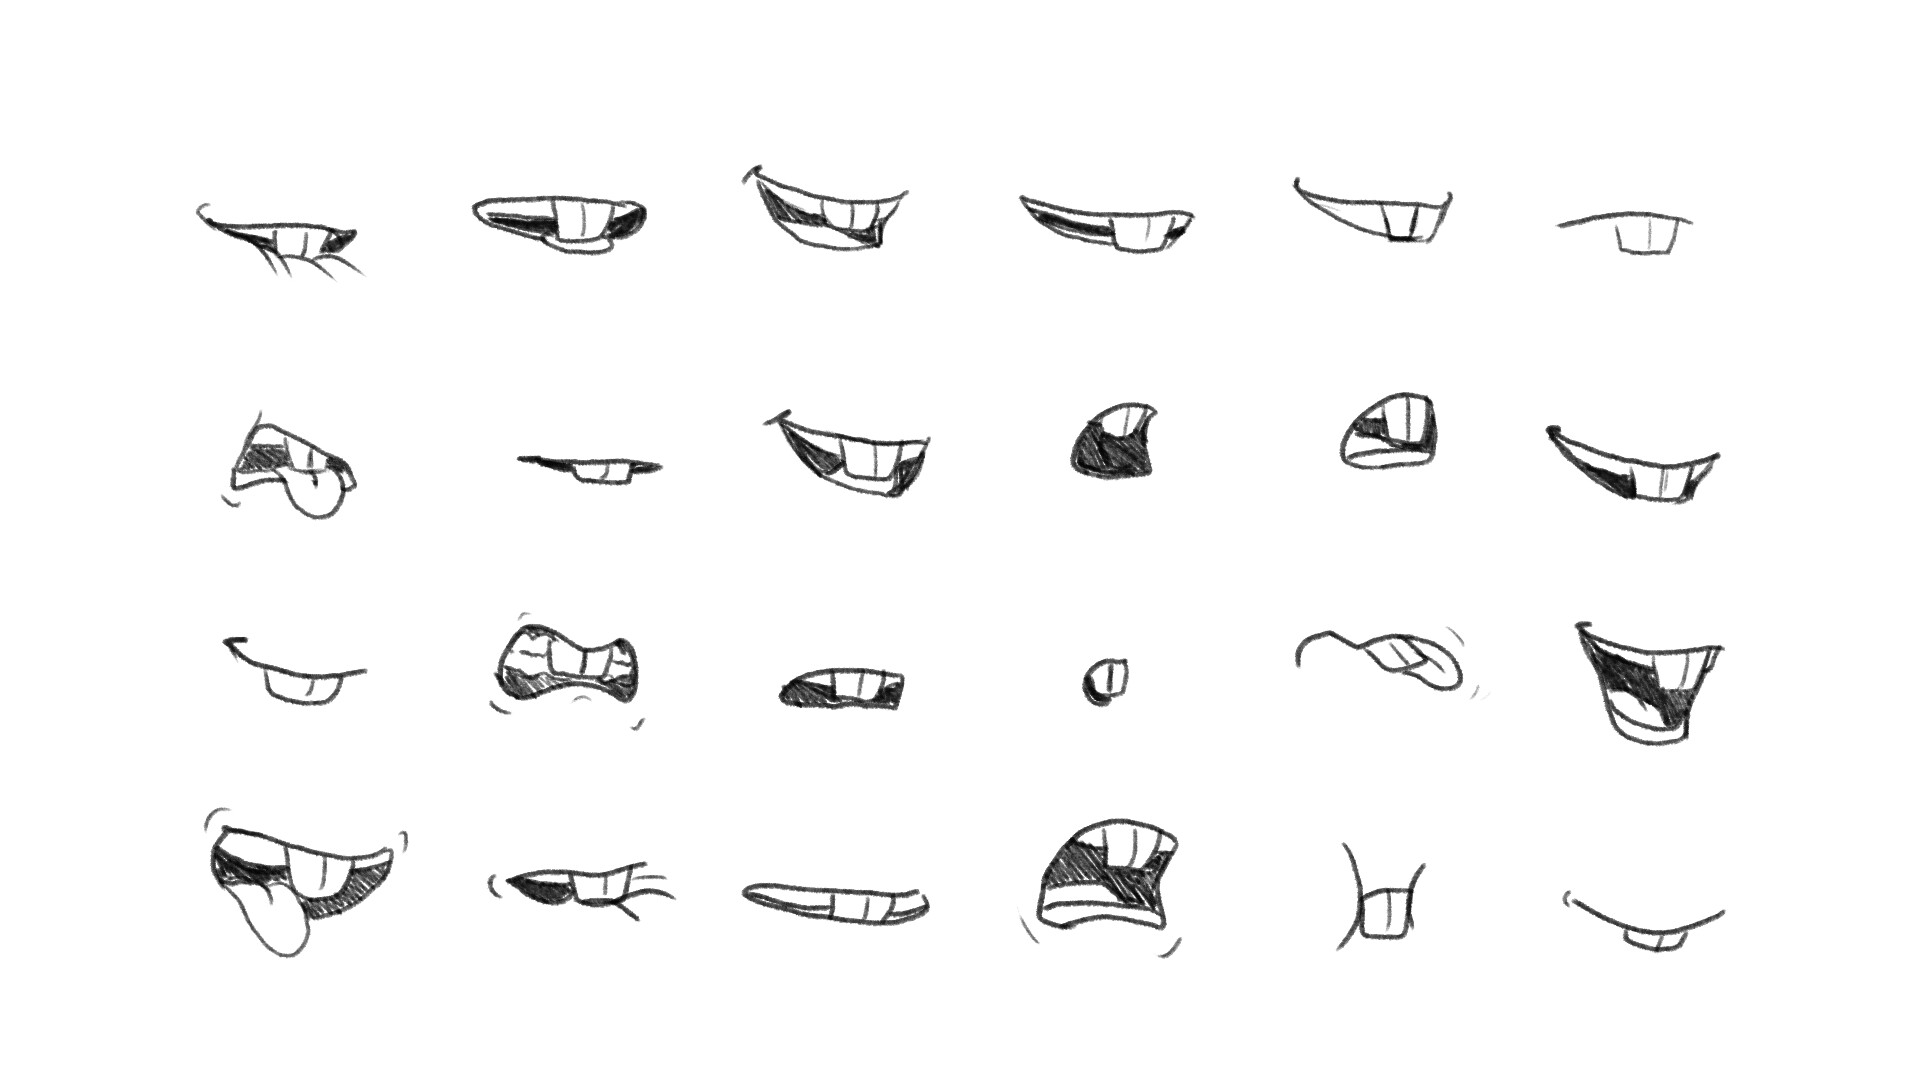 cartoon mouth shapes